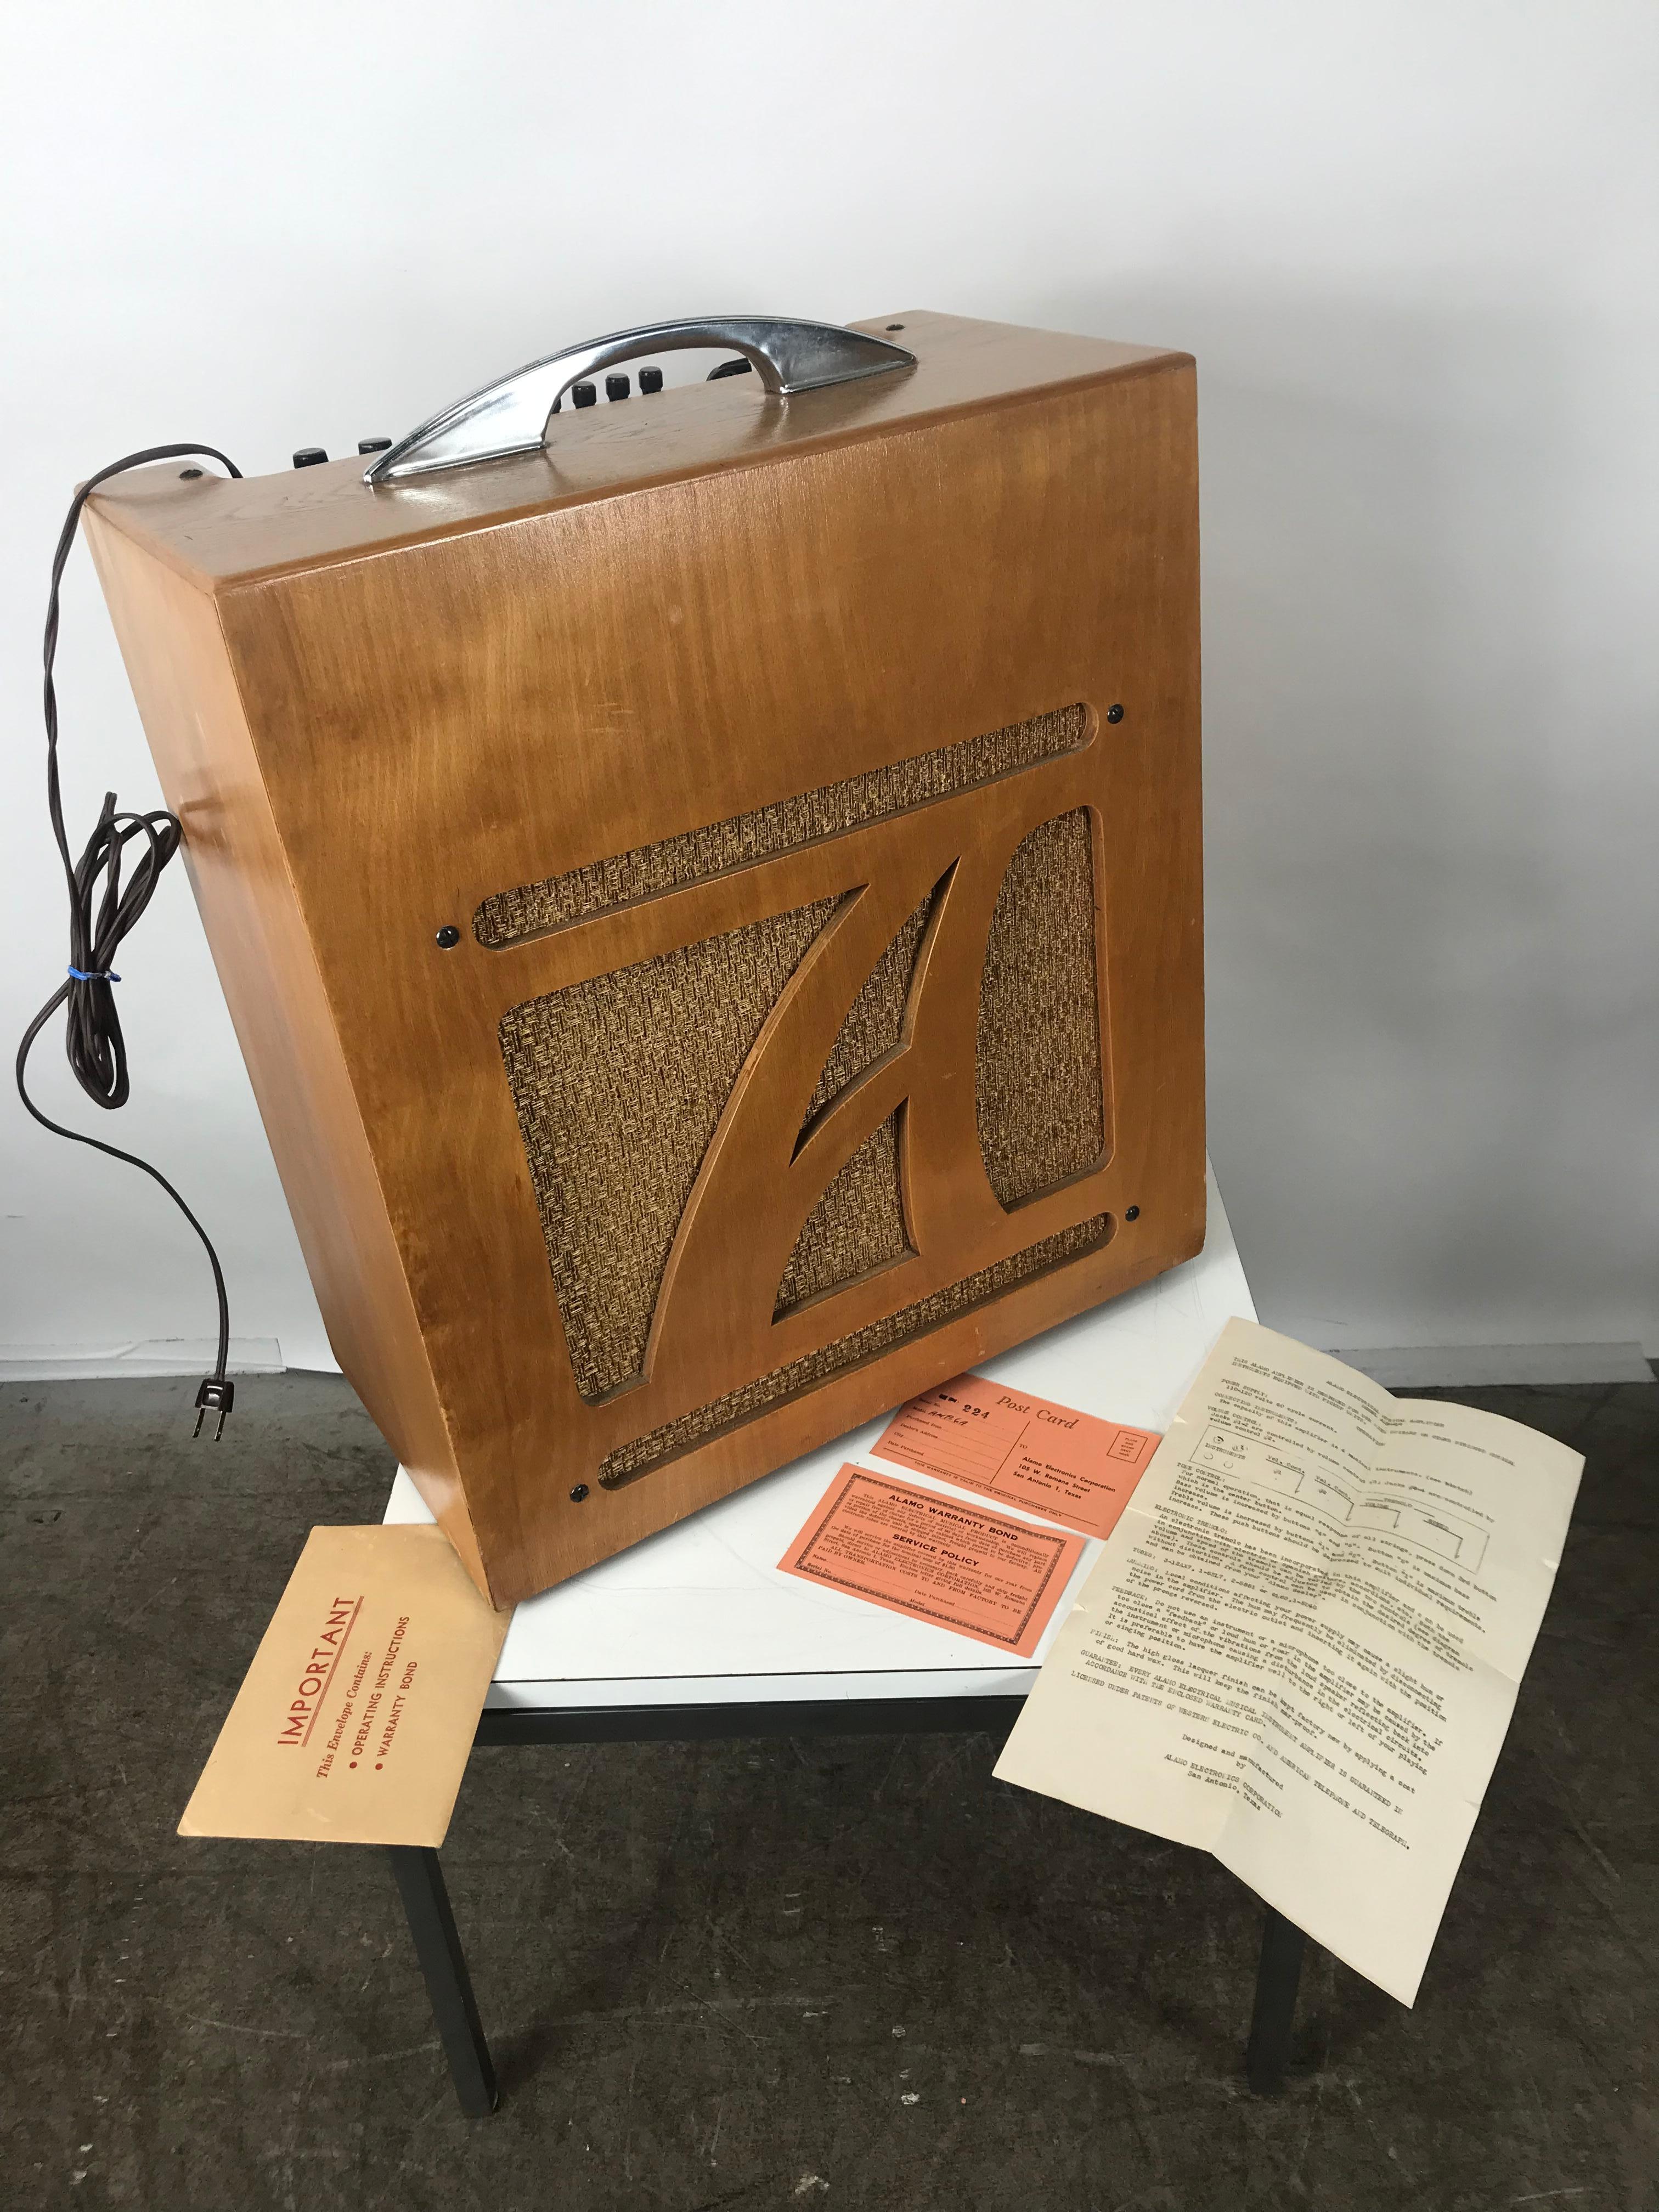 Äußerst seltener Alamo Electrical Musical Amplifier, Modell 6A, 1954 (Mitte des 20. Jahrhunderts)